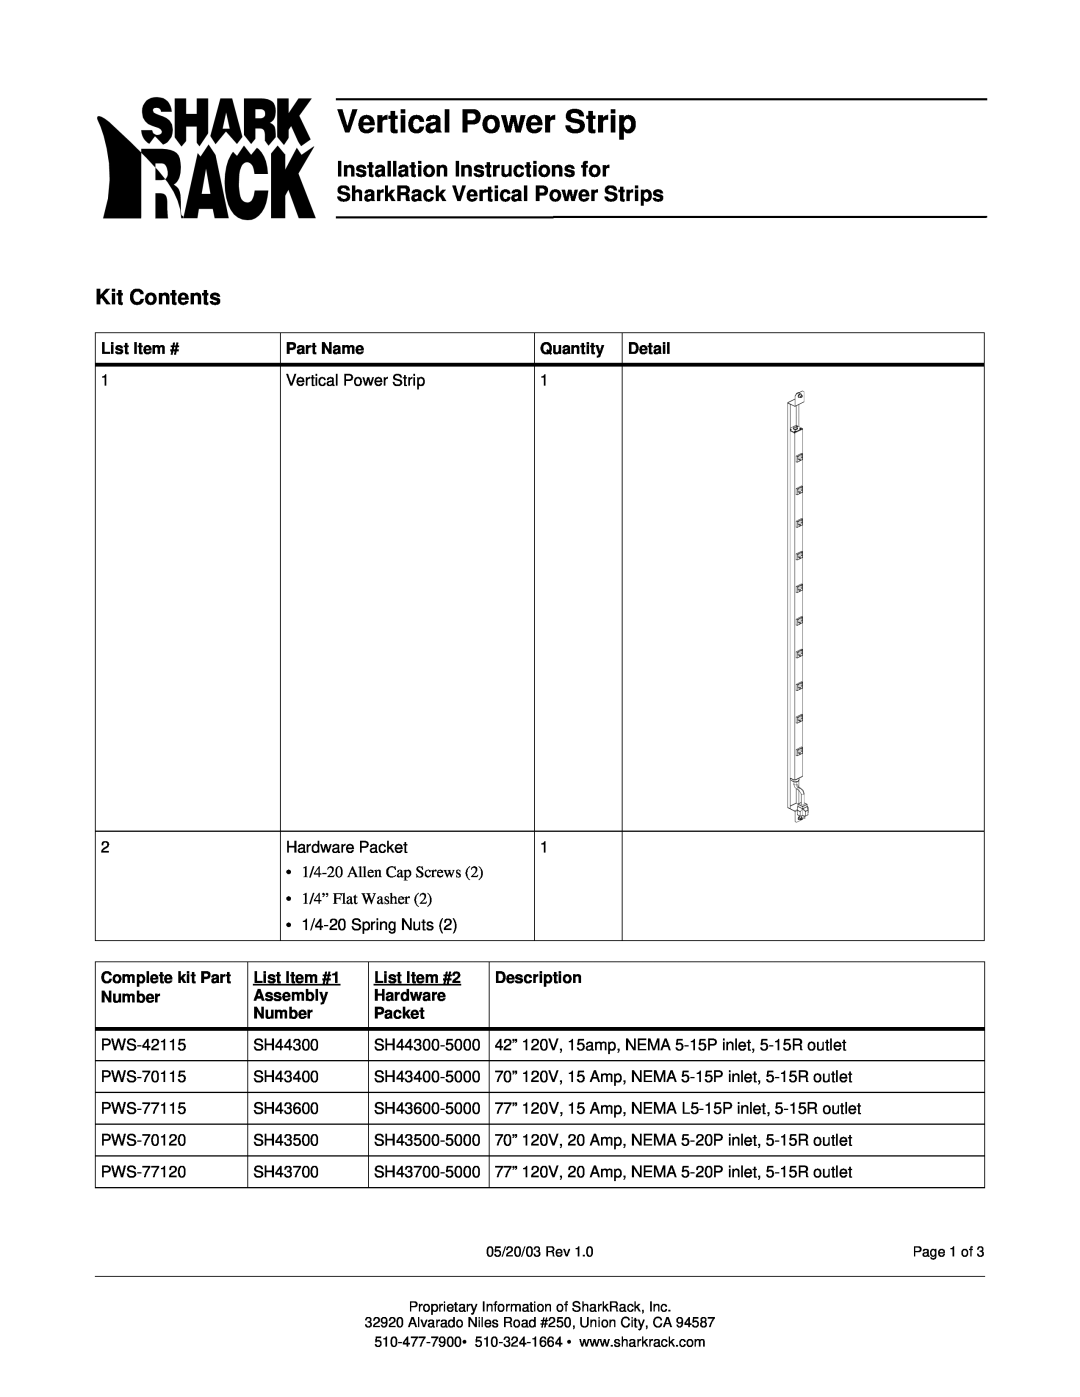 SharkRack PWS-42115 installation instructions Kit Contents, Installation Instructions for SharkRack Vertical Power Strips 